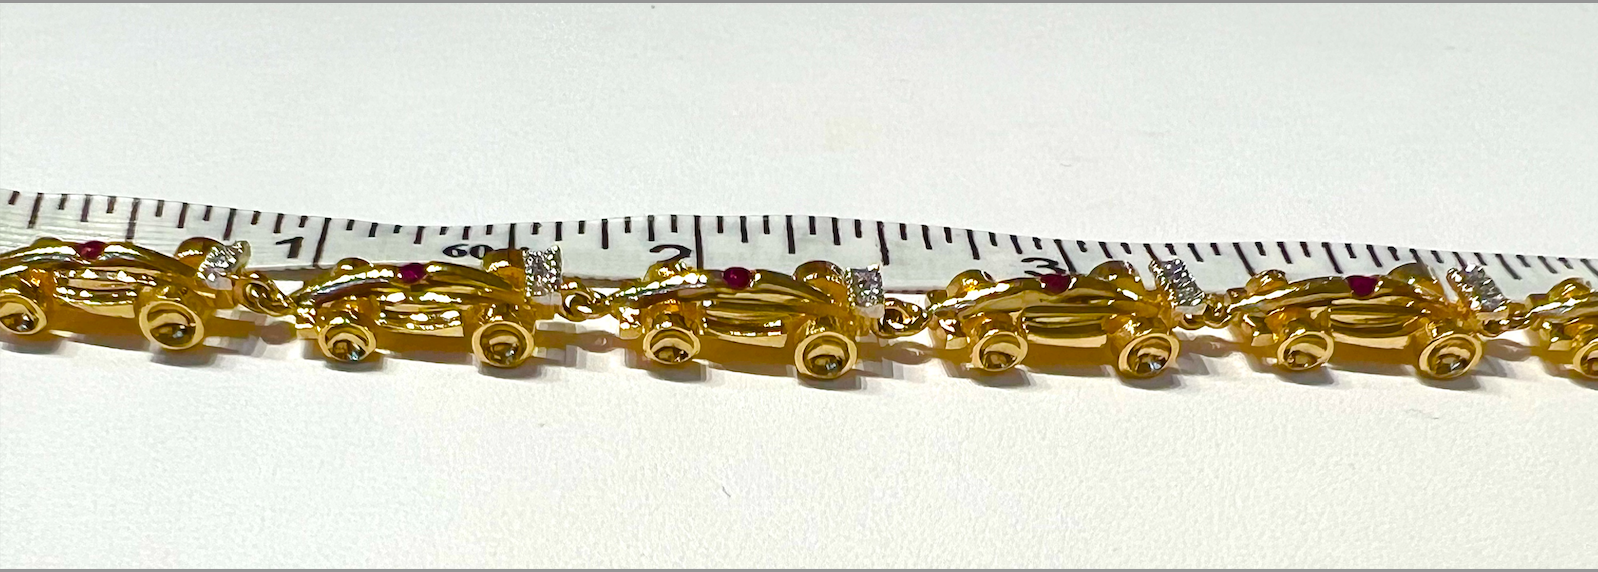 Gold Formula One Race Car Bracelet with Rubies and Diamonds